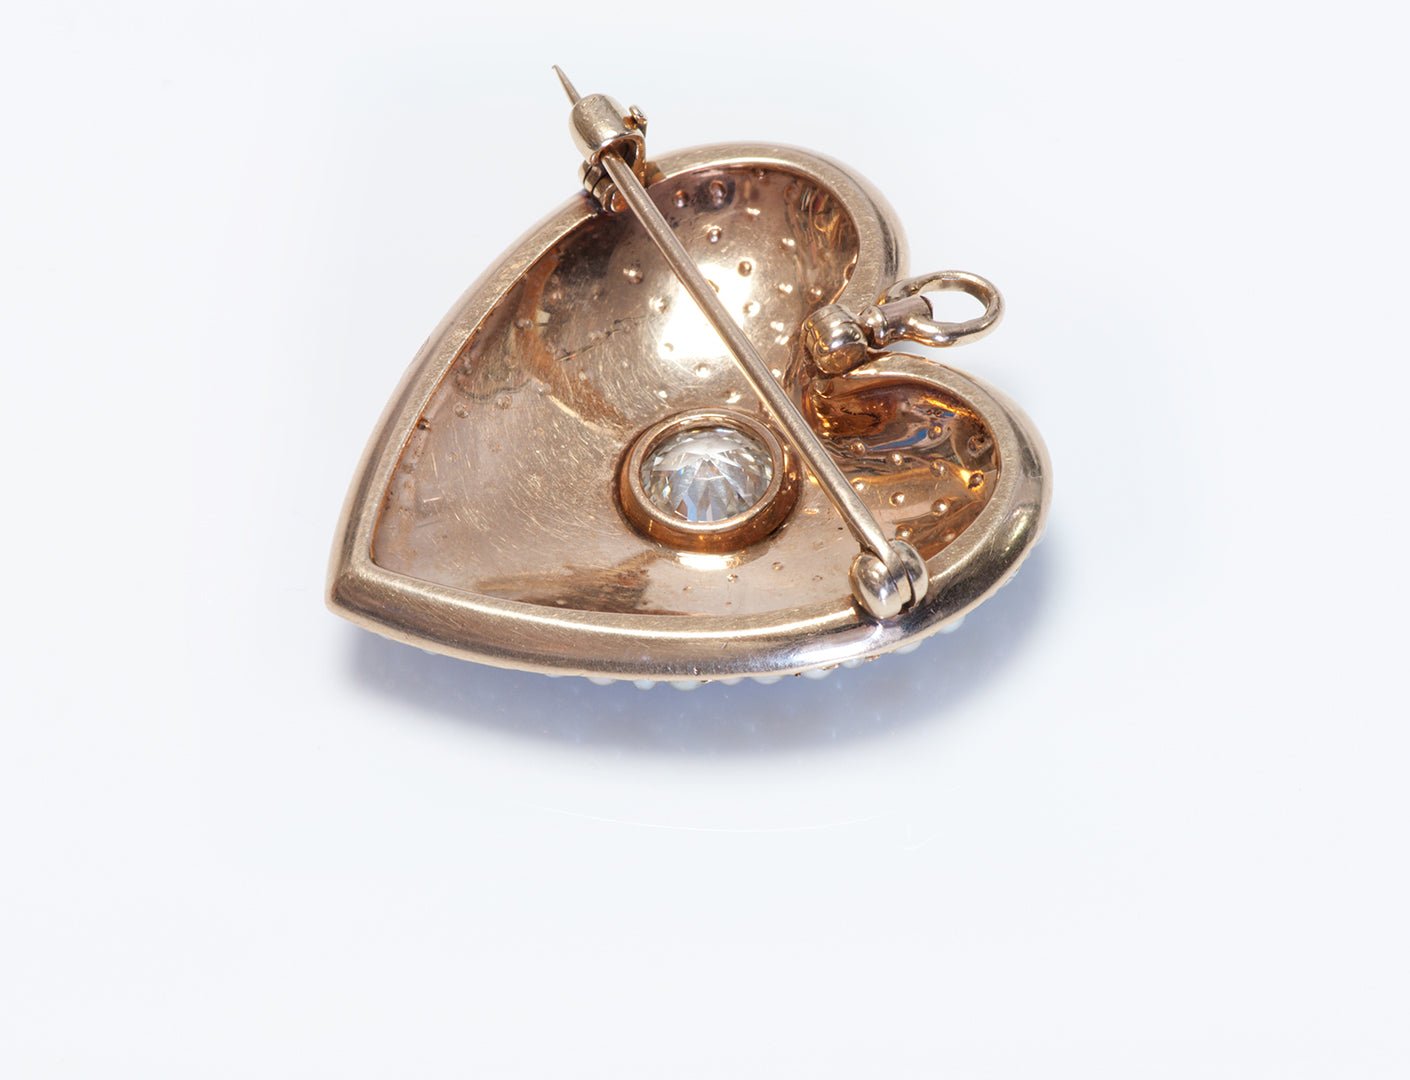 Antique Edwardian Gold Diamond Seed Pearl Heart Pendant Brooch